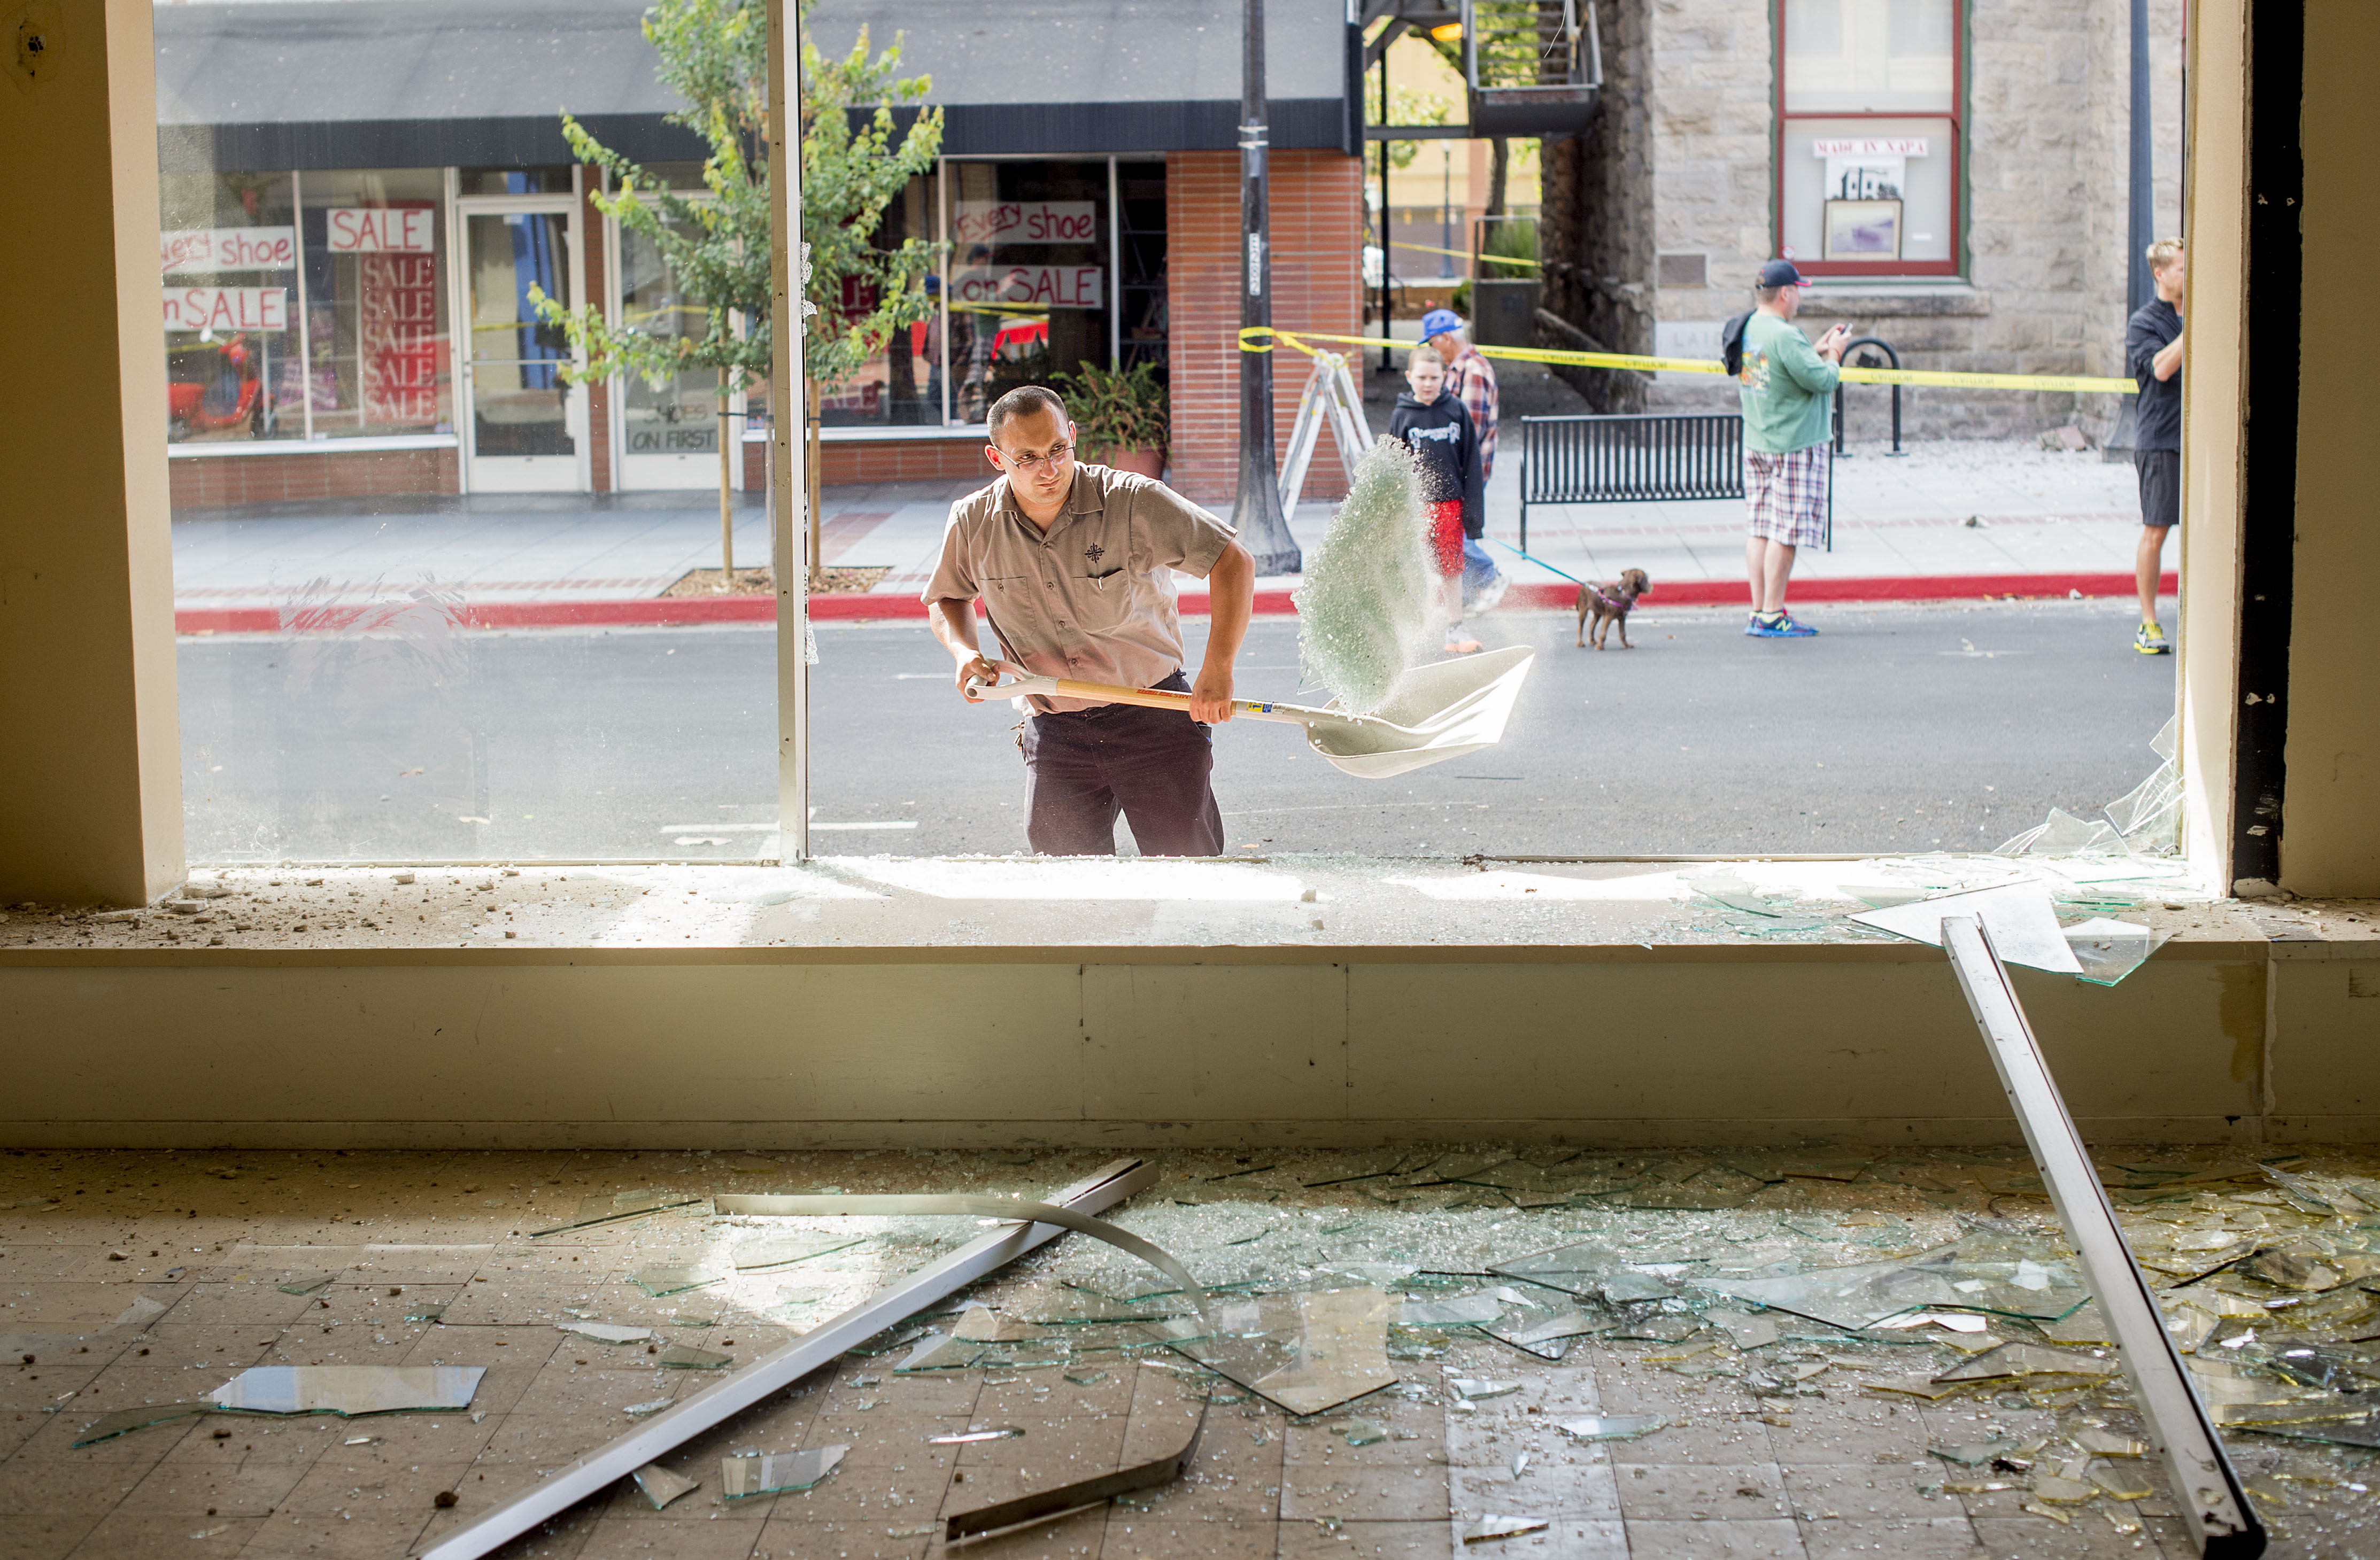 Man cleaning up broken glass